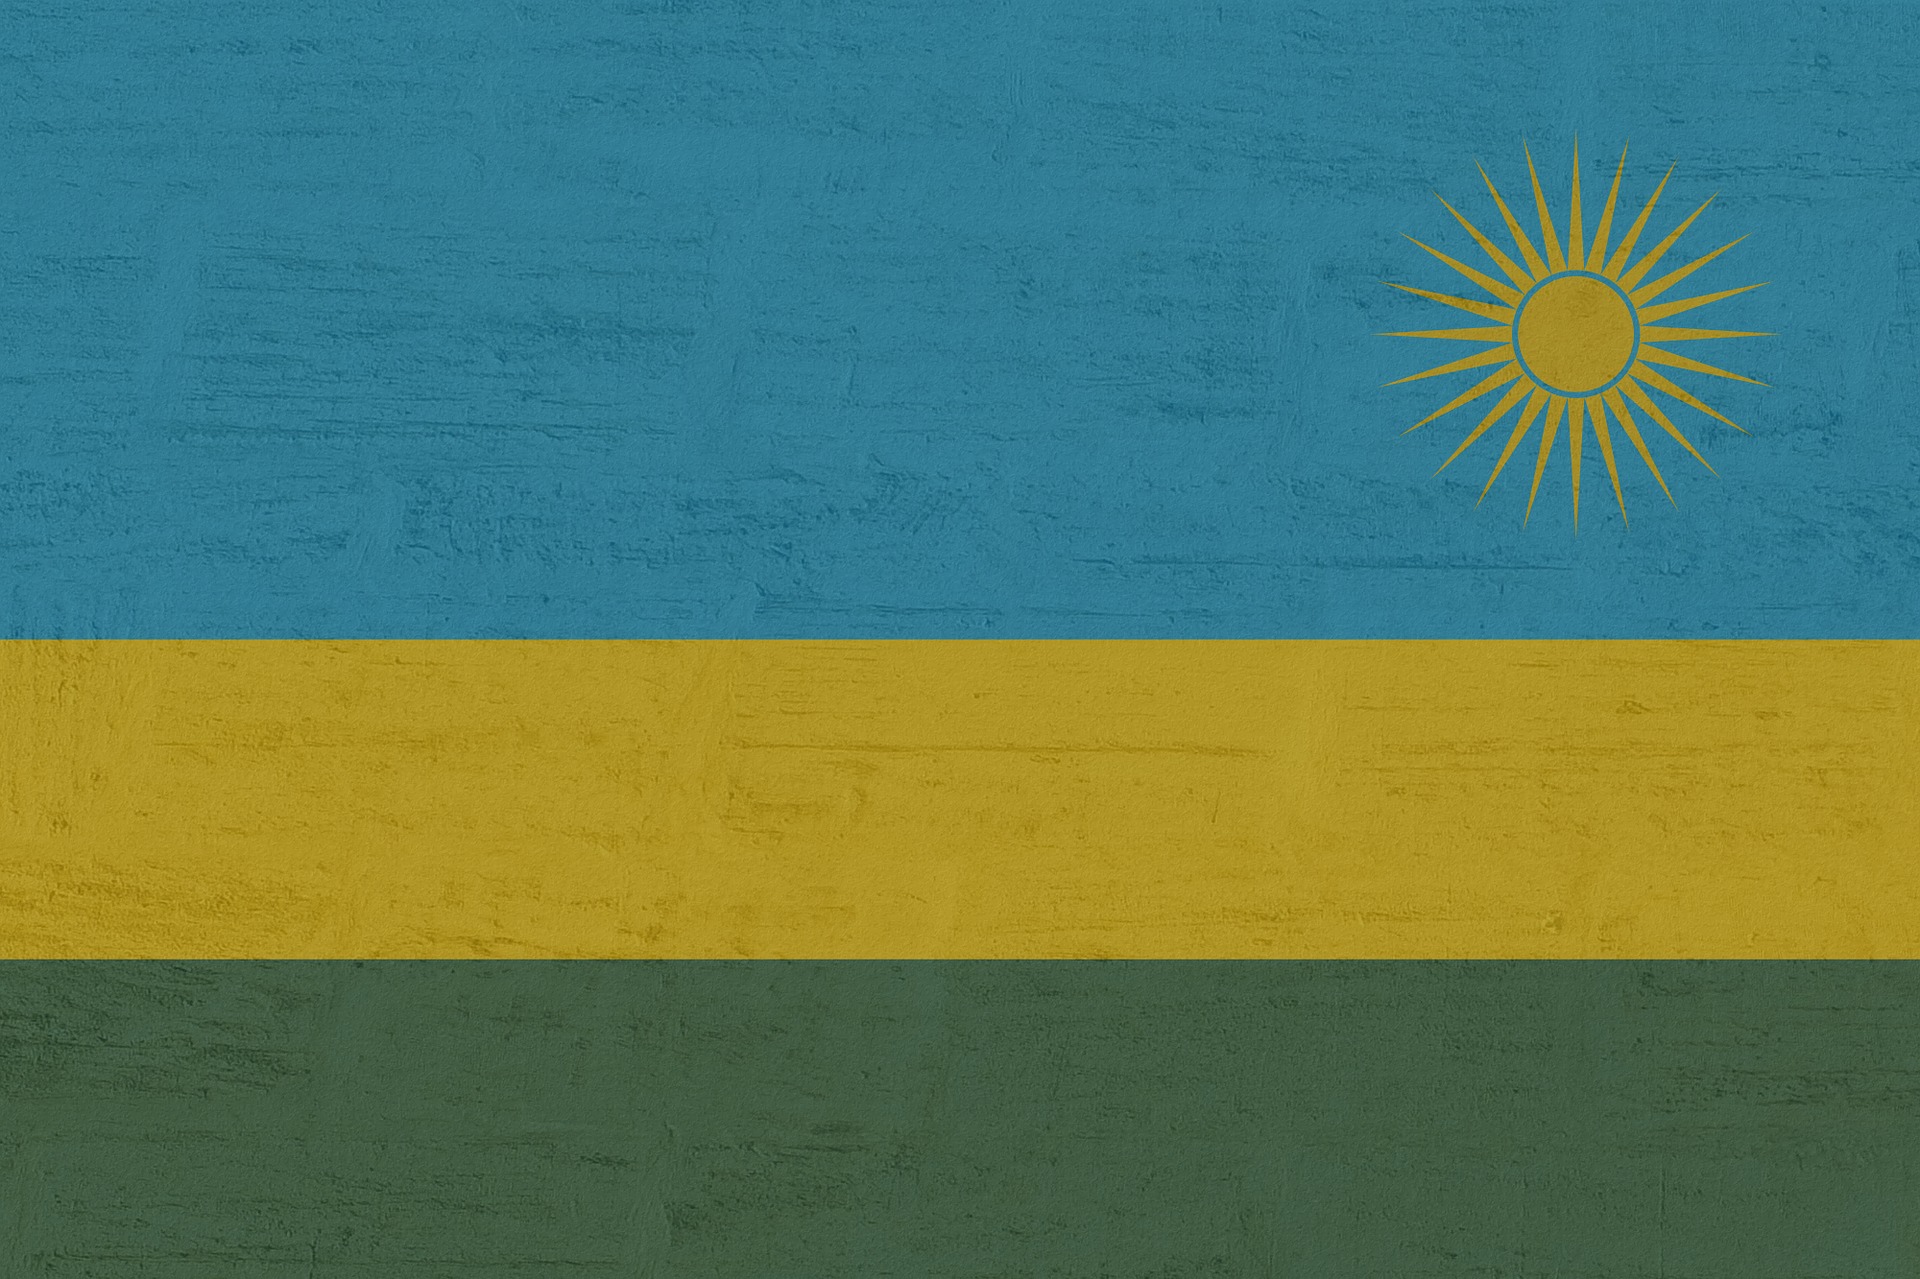 ruanda_flag-5.jpg